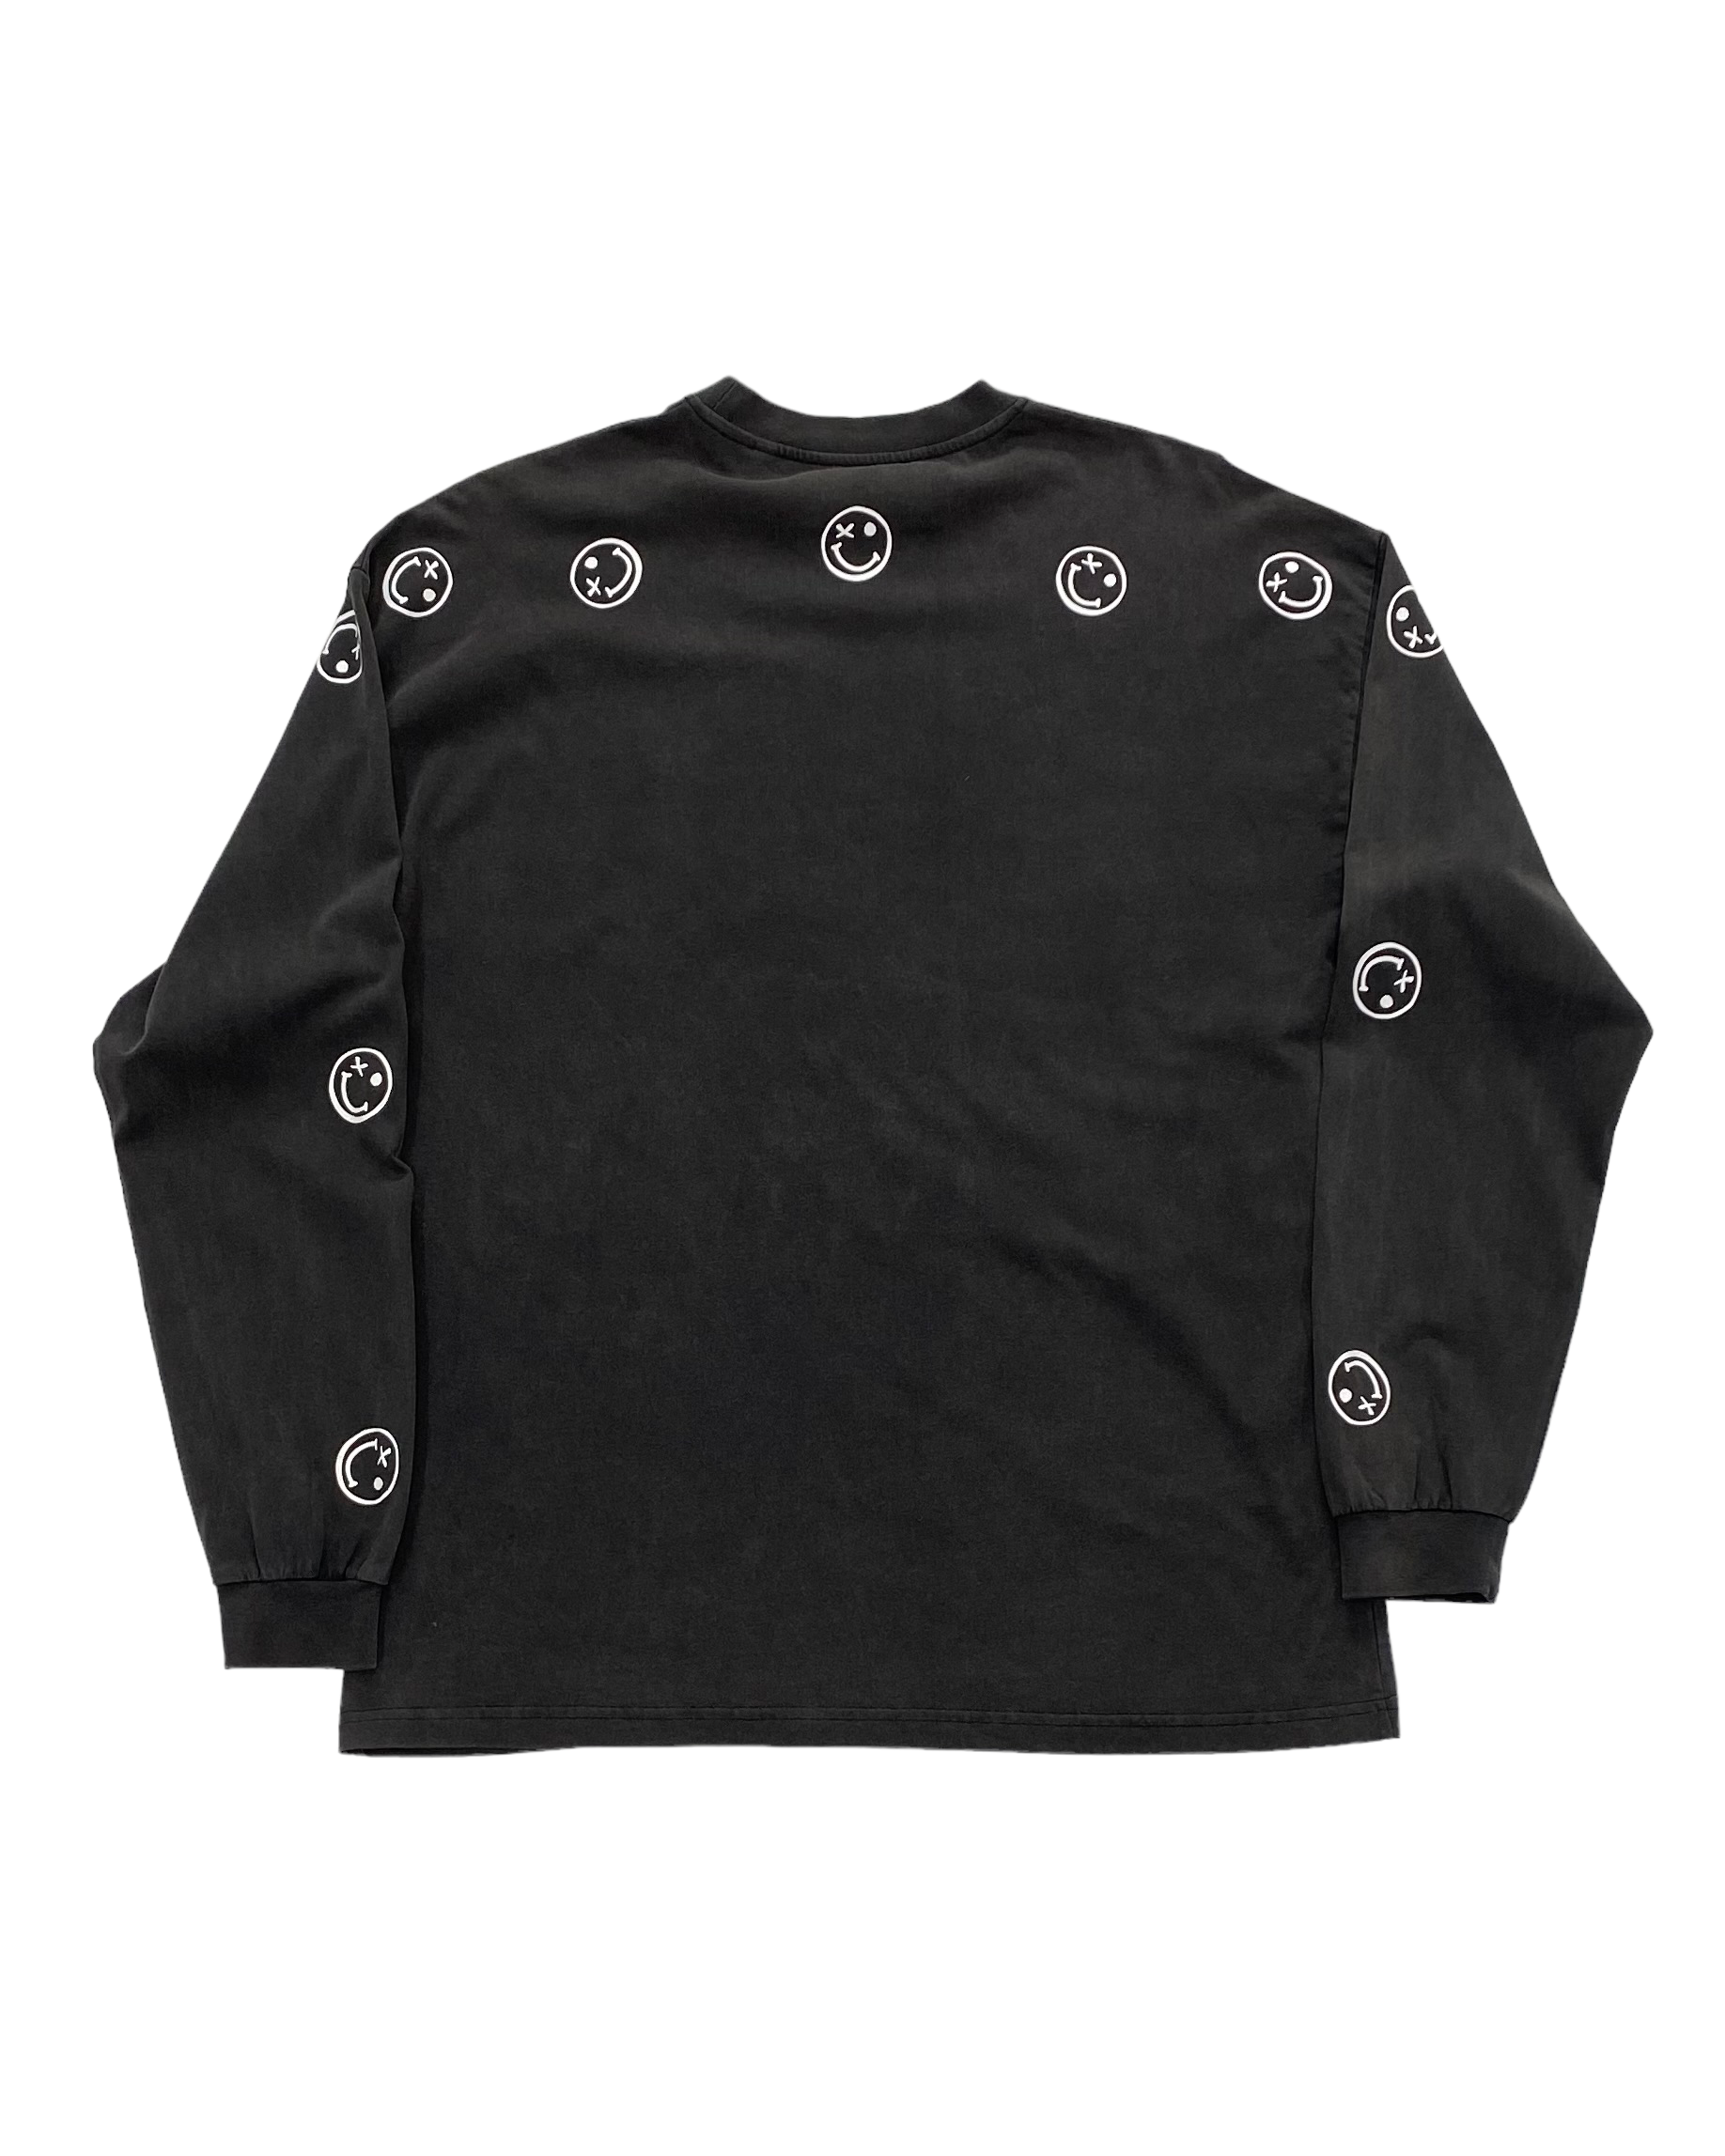 Black Long Sleeve Oversized Smiley Shirt